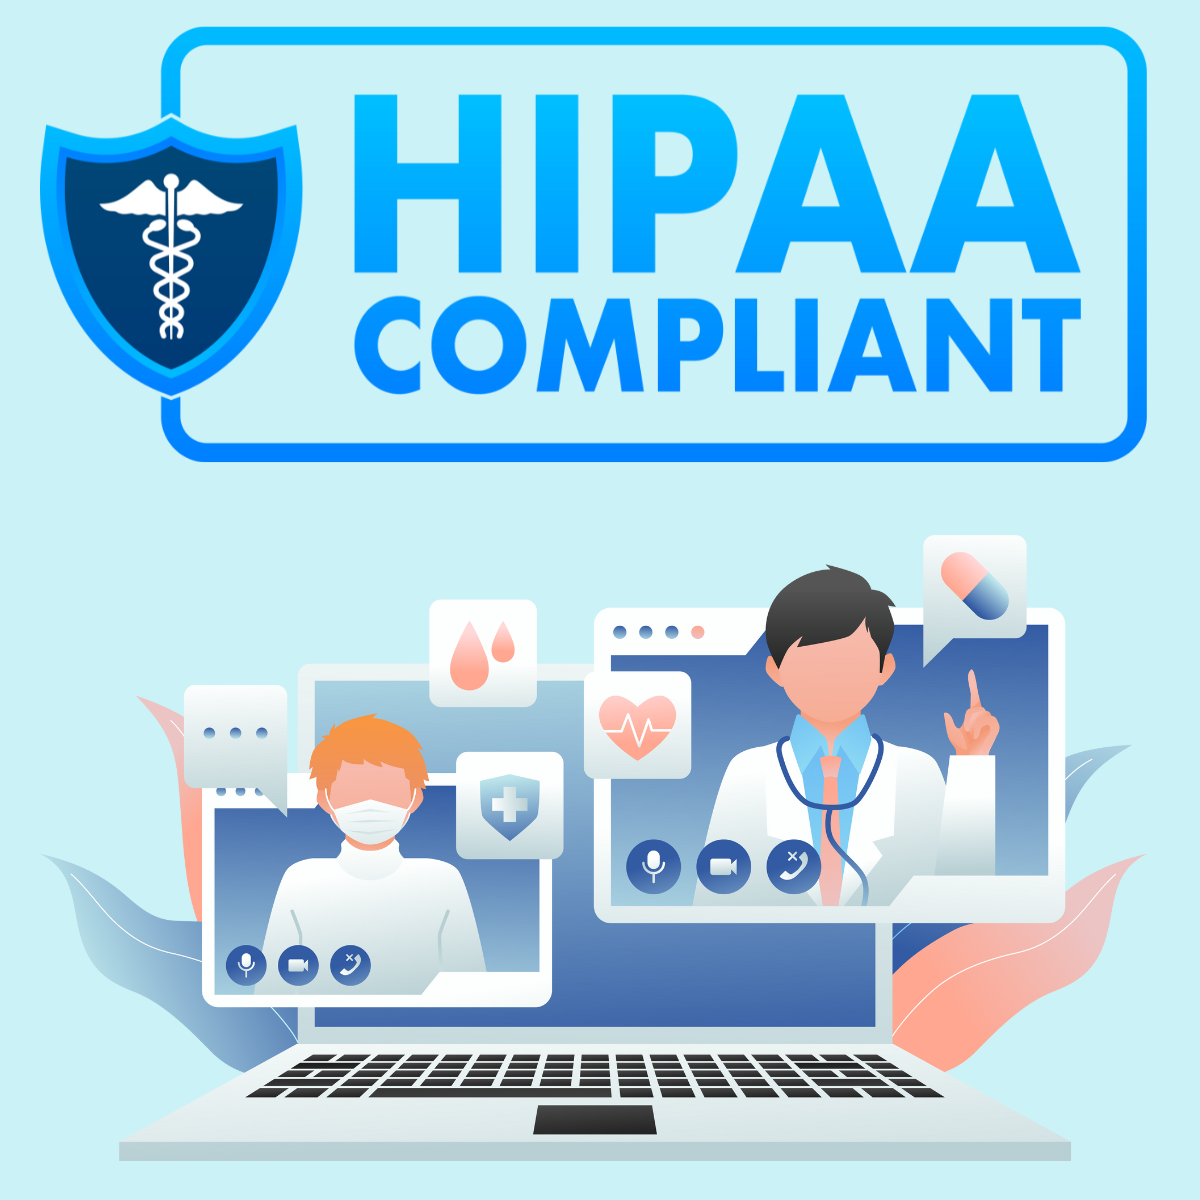 HIPAA compliant 